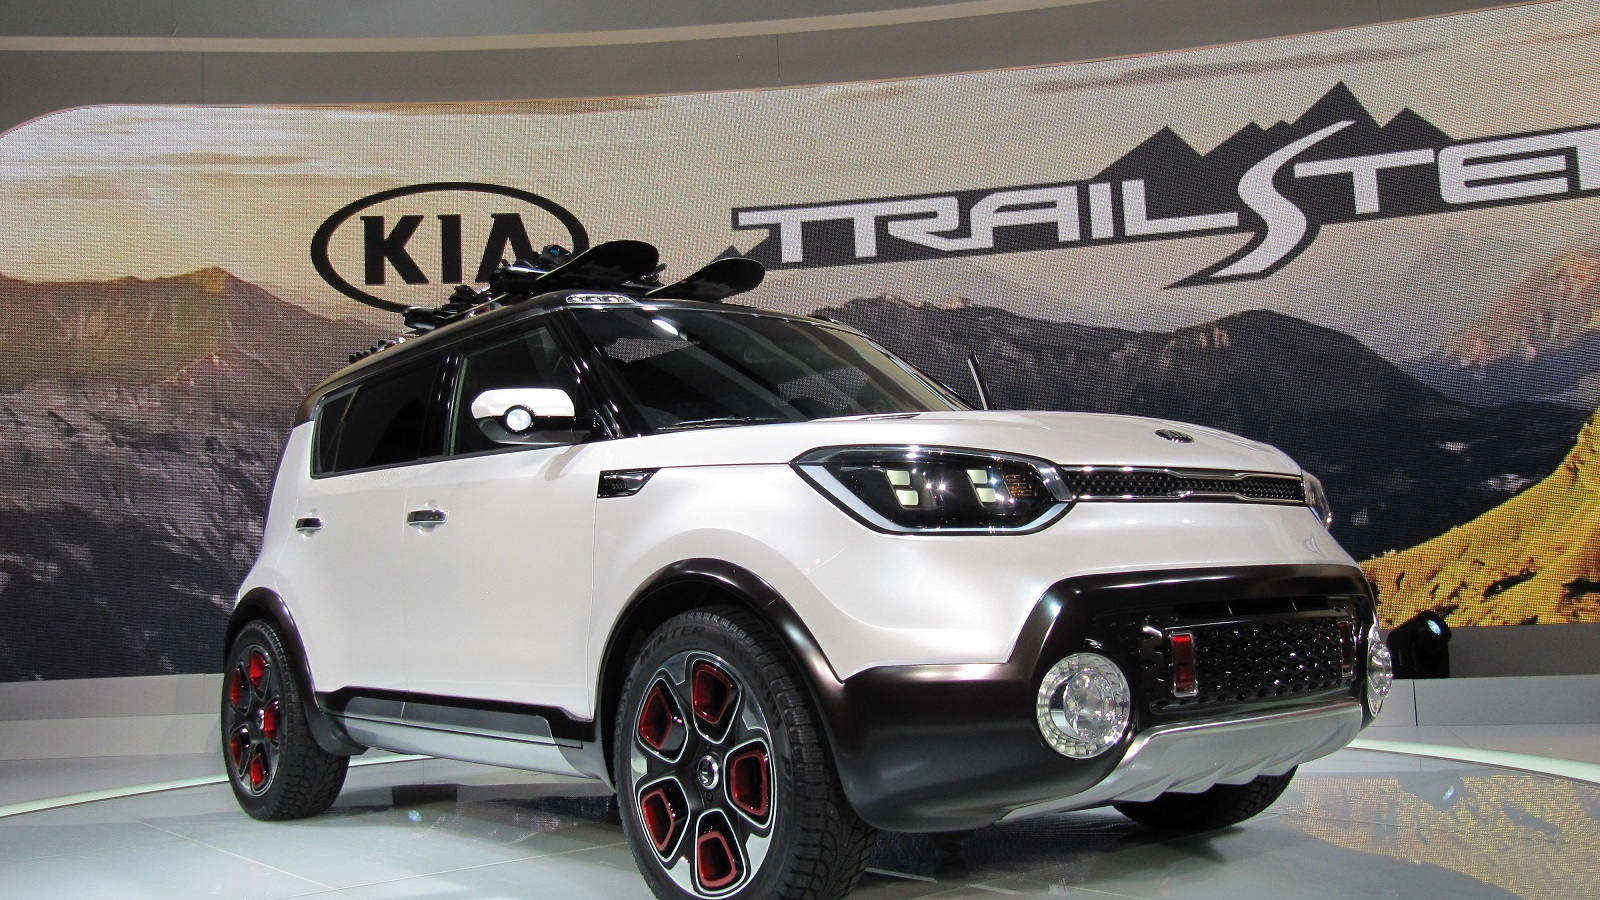 Kia Trail'ster e-AWD hybrid concept at 2015 Chicago Auto Show